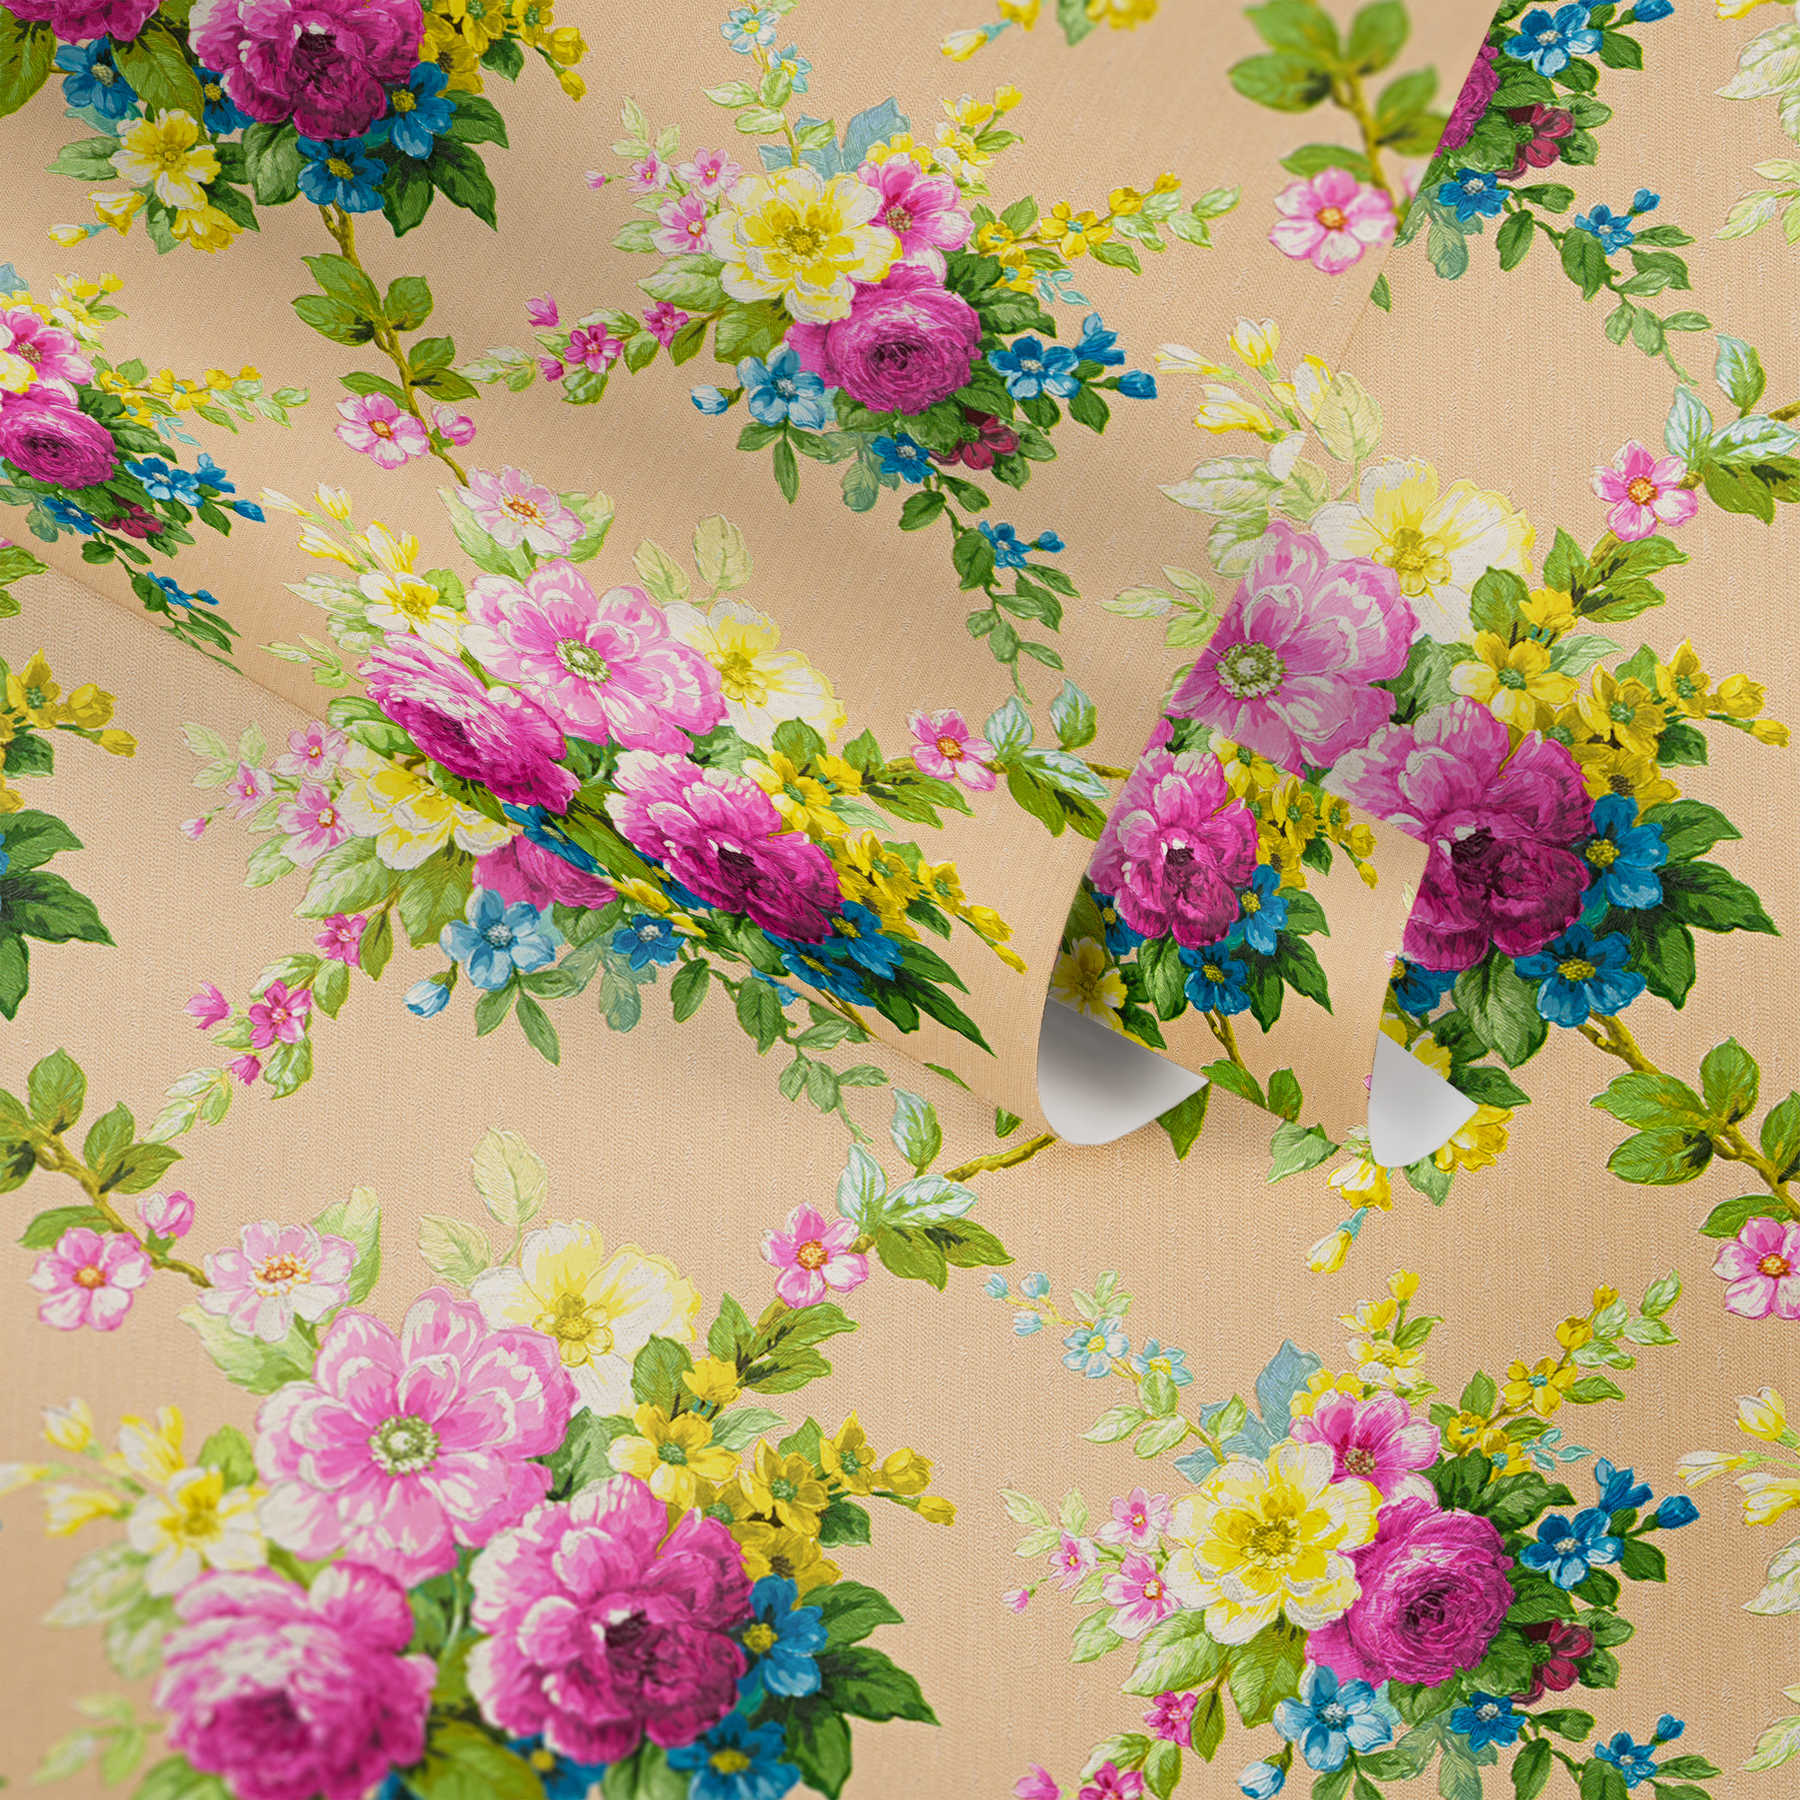             Tapete Blumen Dekor Blütenornament mit Metallic Effekt – Bunt
        